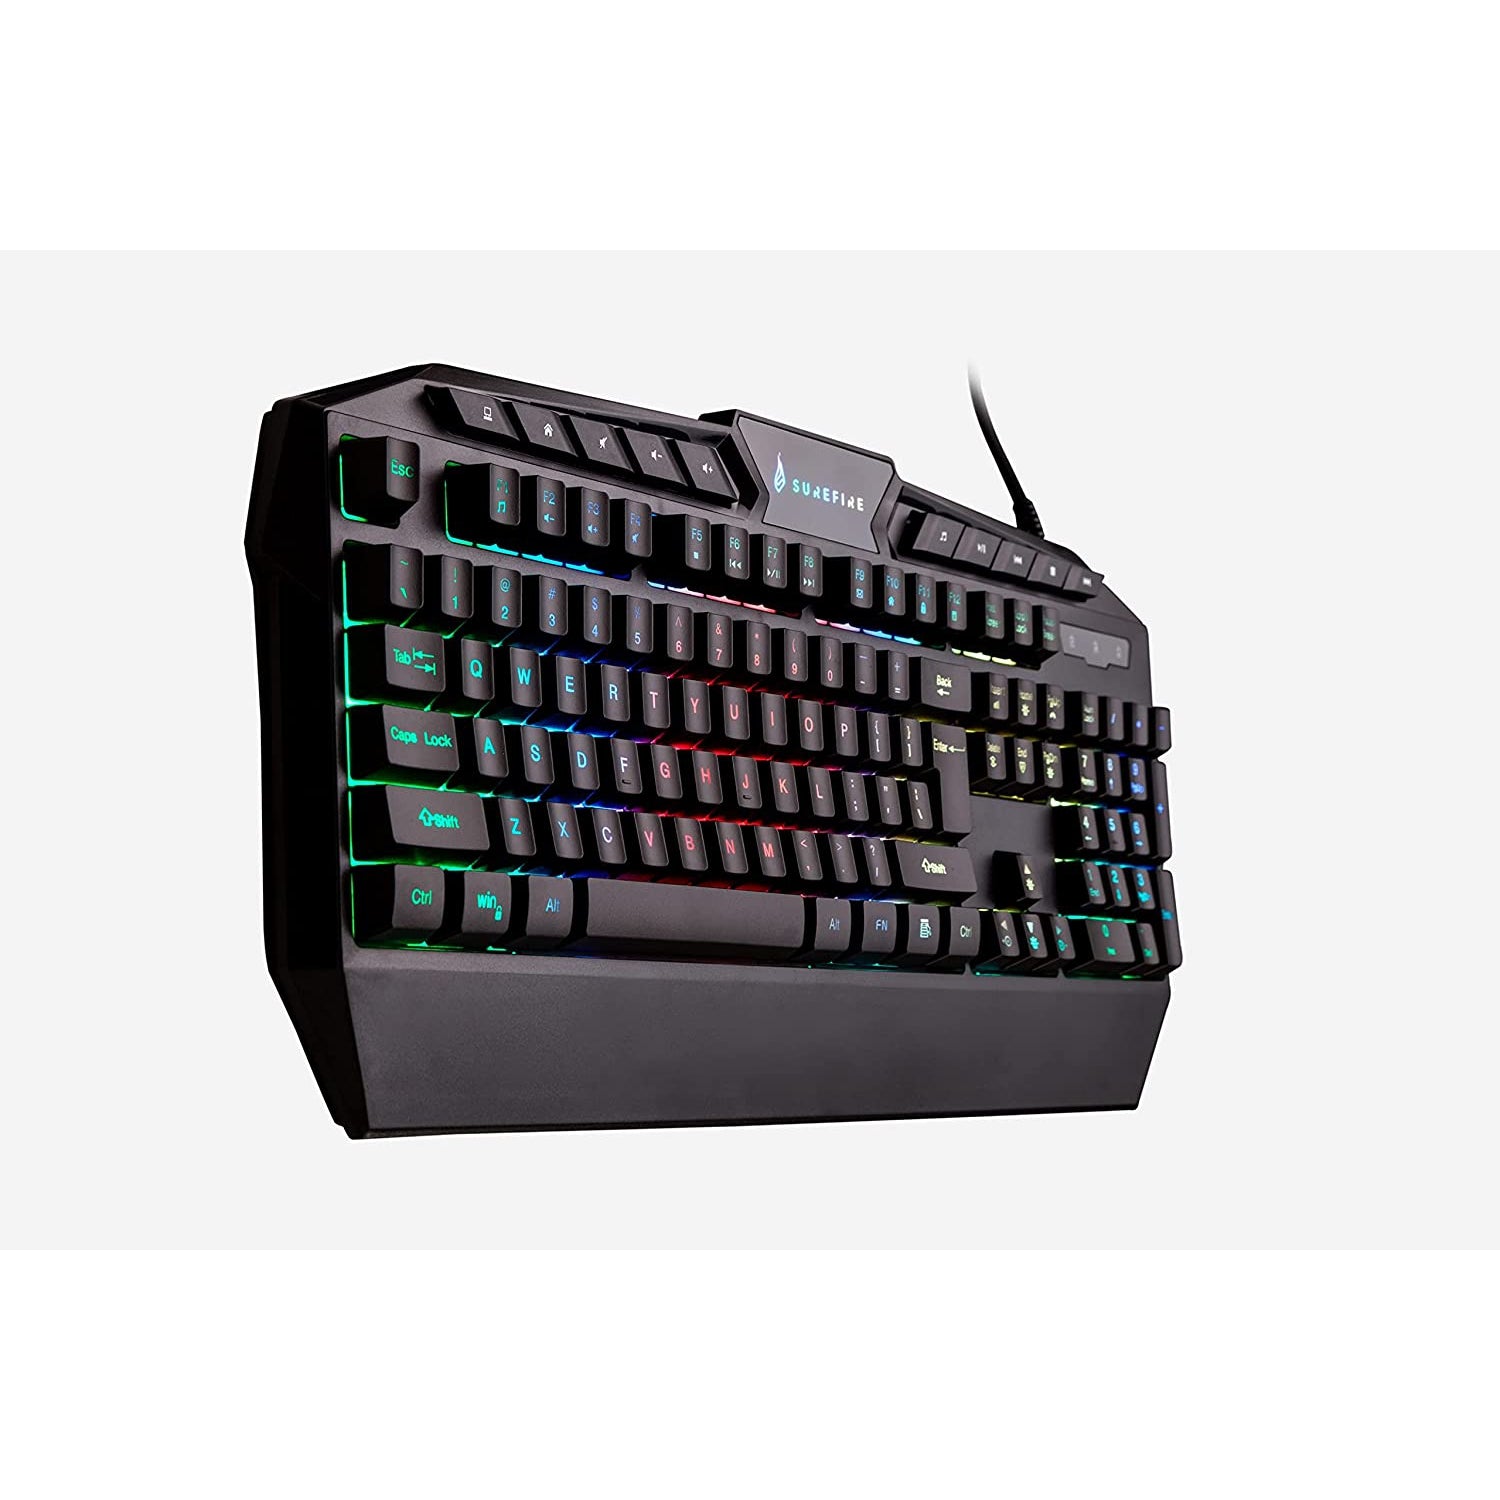 Surefire KingPin RGB Gaming Multimedia QWERTY Keyboard - New